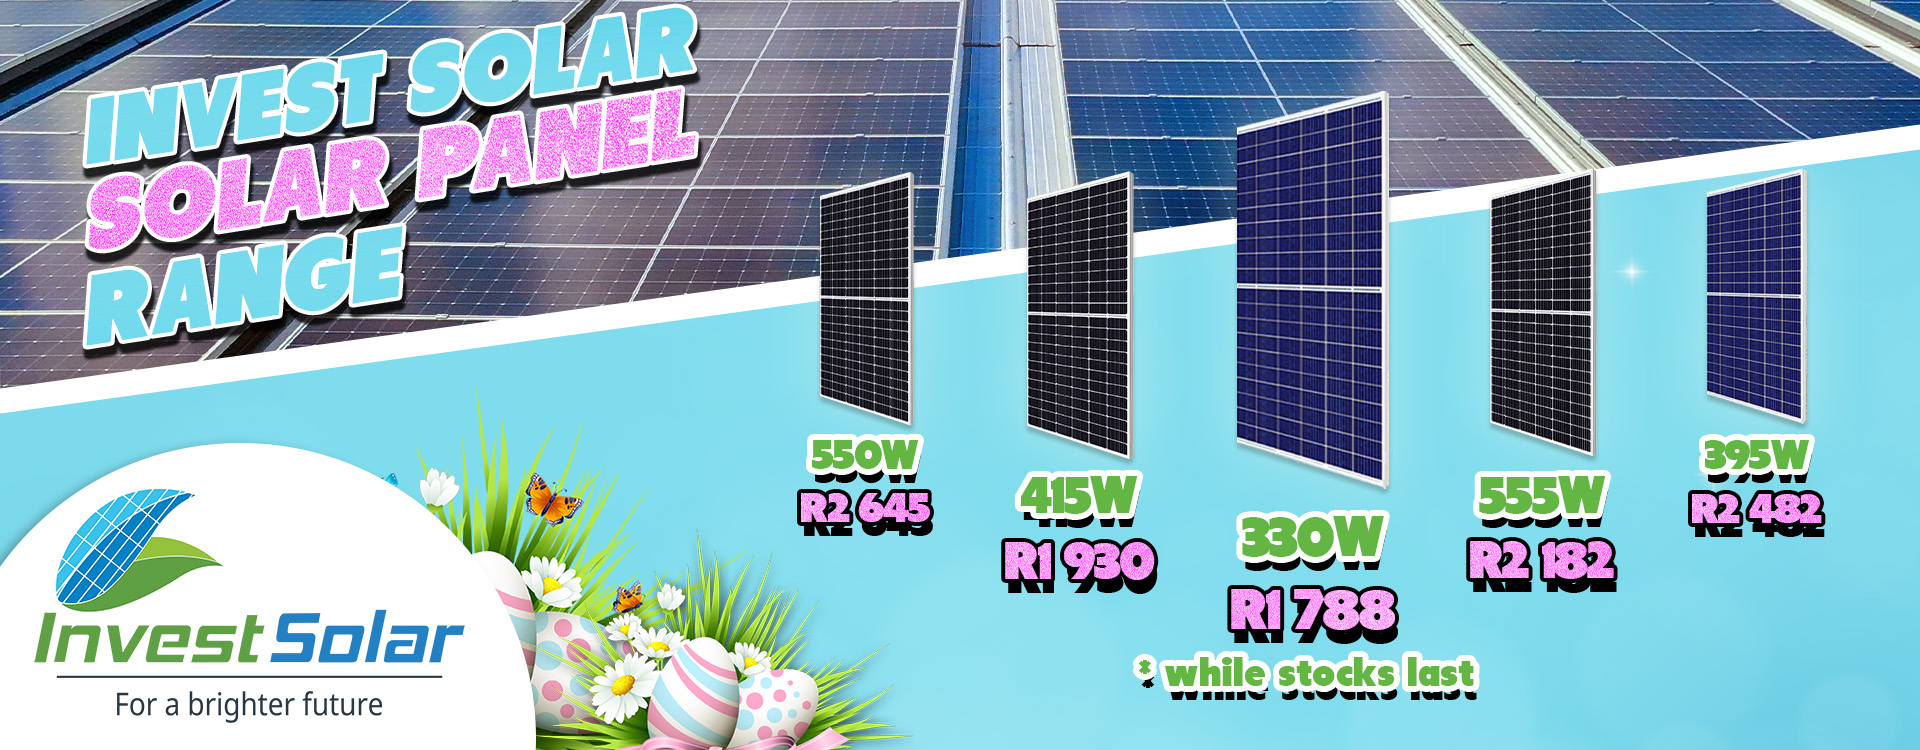 Solar Panels Banner April